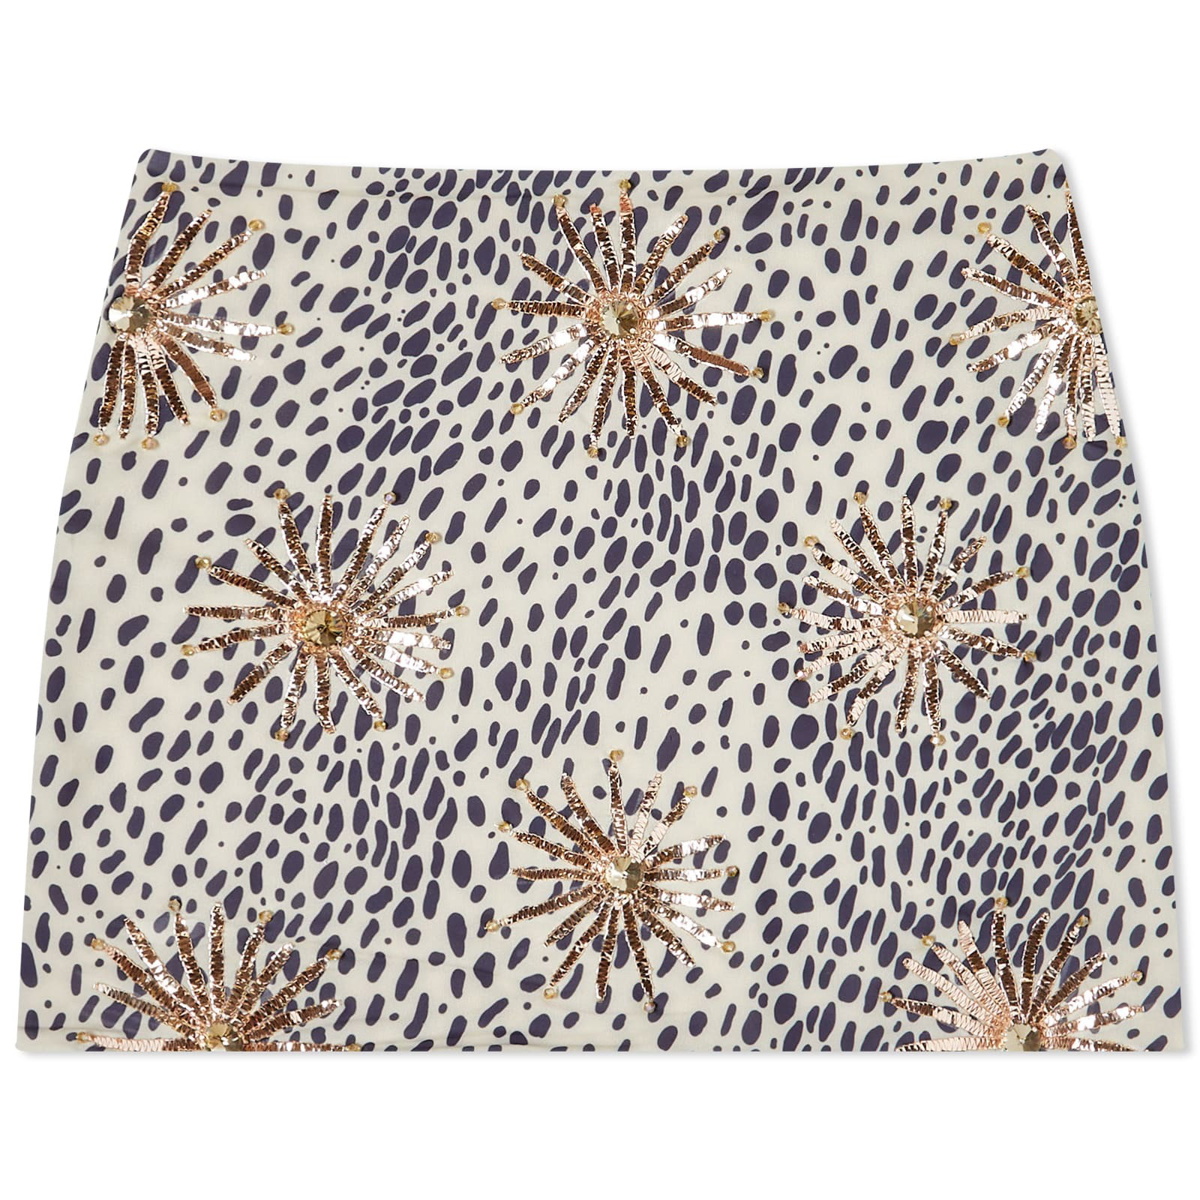 Photo: Oceanus Women's Callie Print Mini Skirt in Leopard